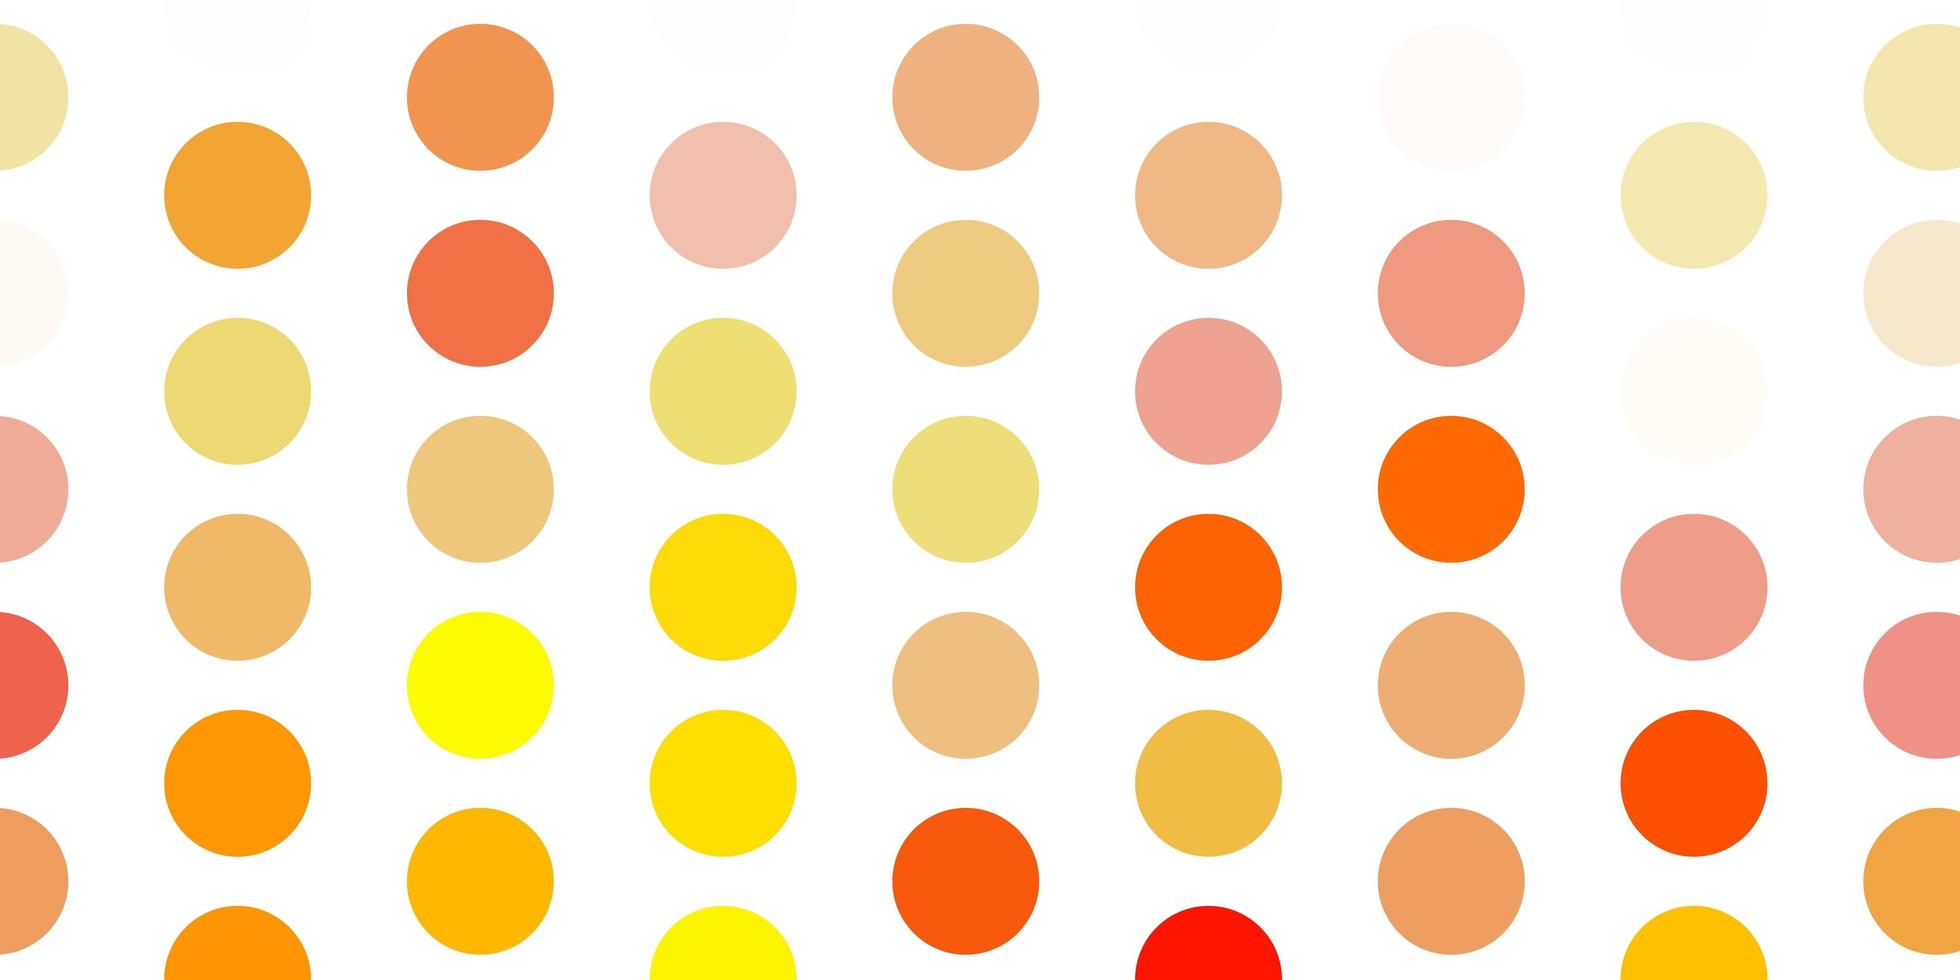 Light orange vector pattern with spheres.